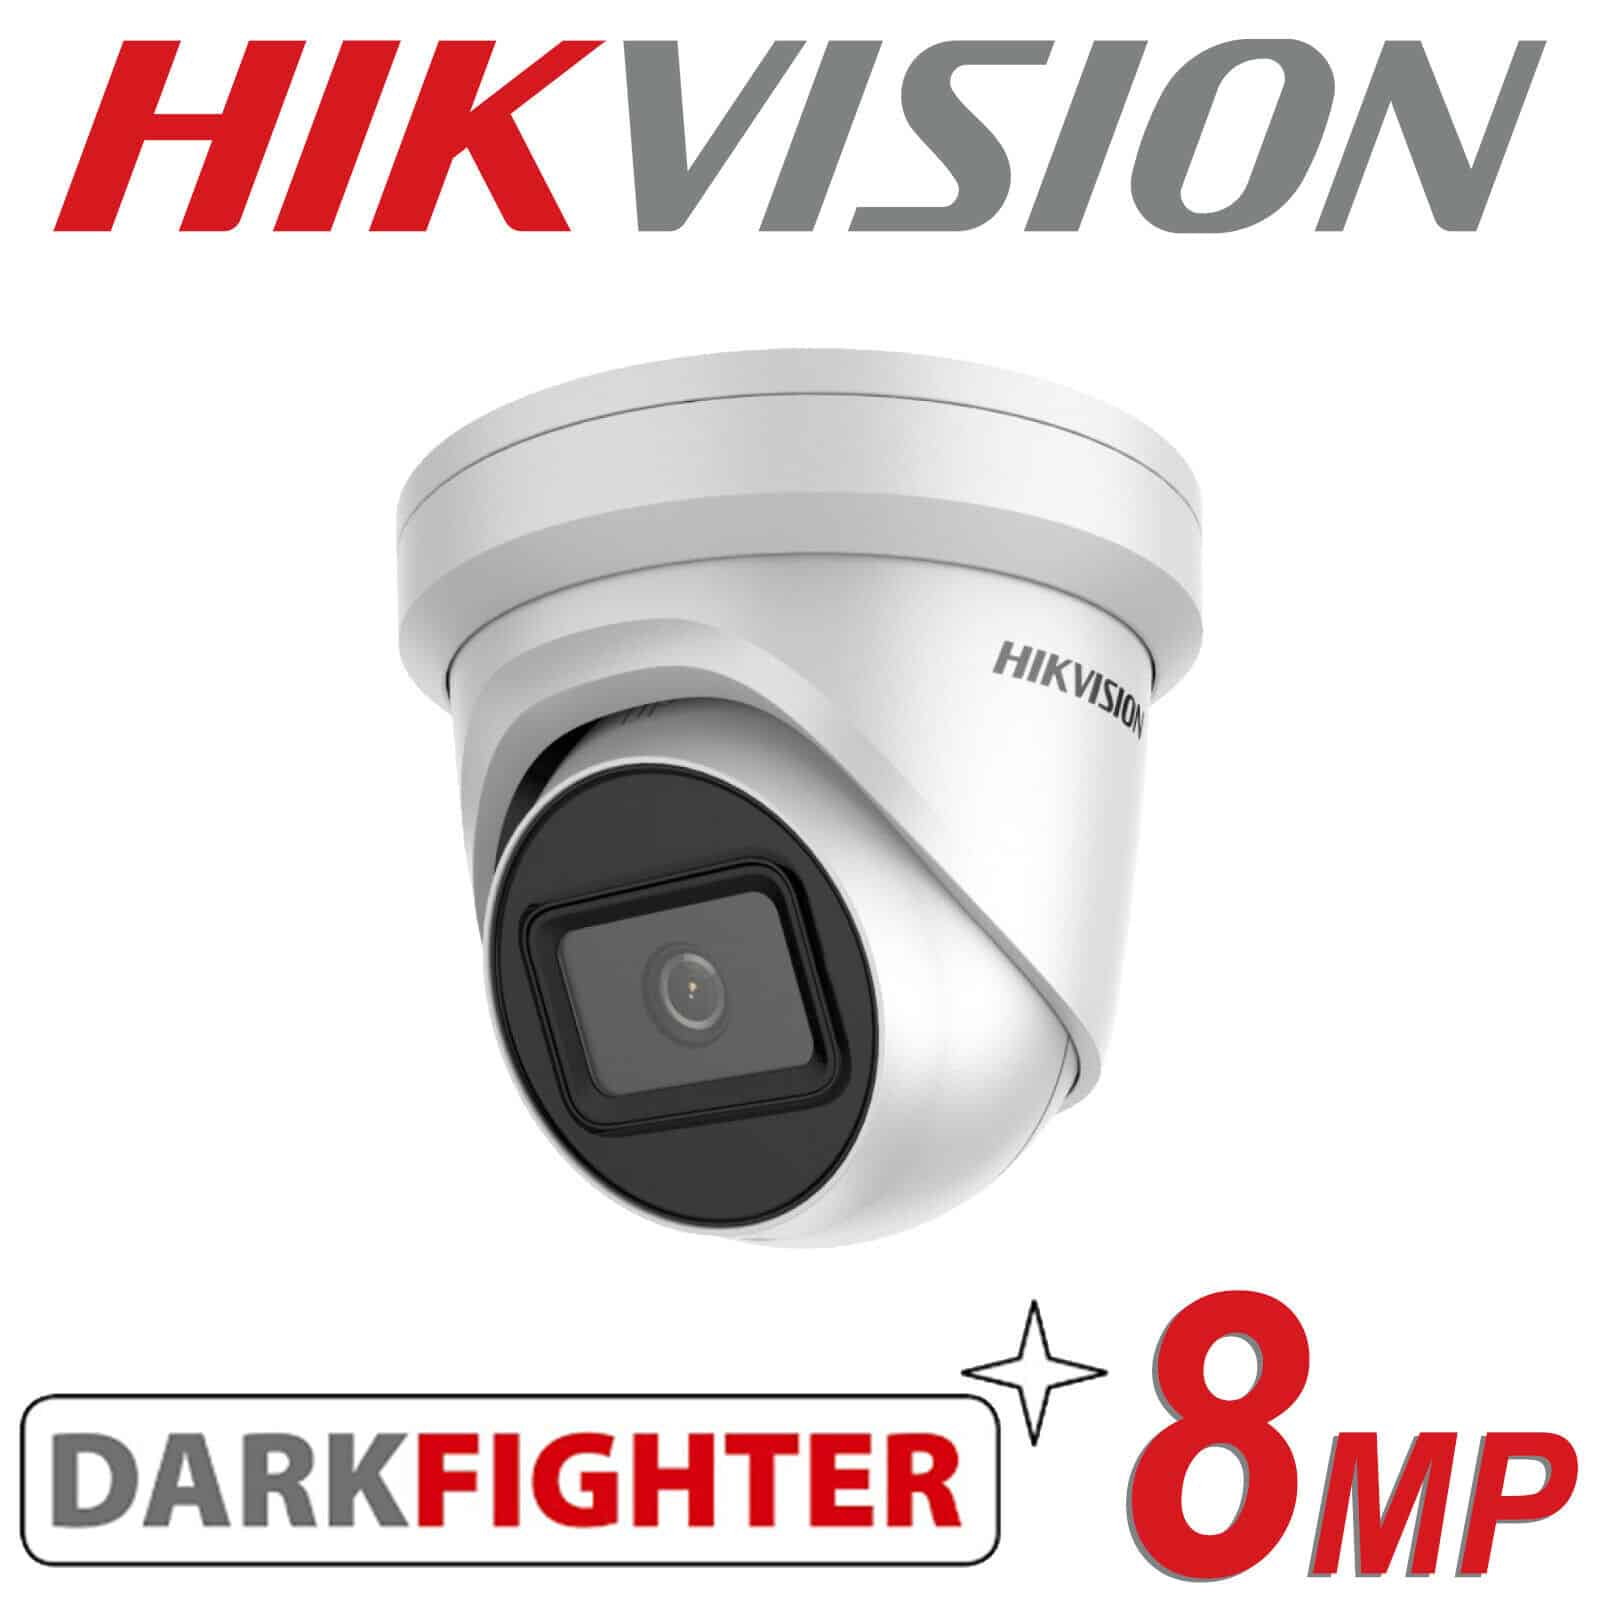 hikvision 4k darkfighter